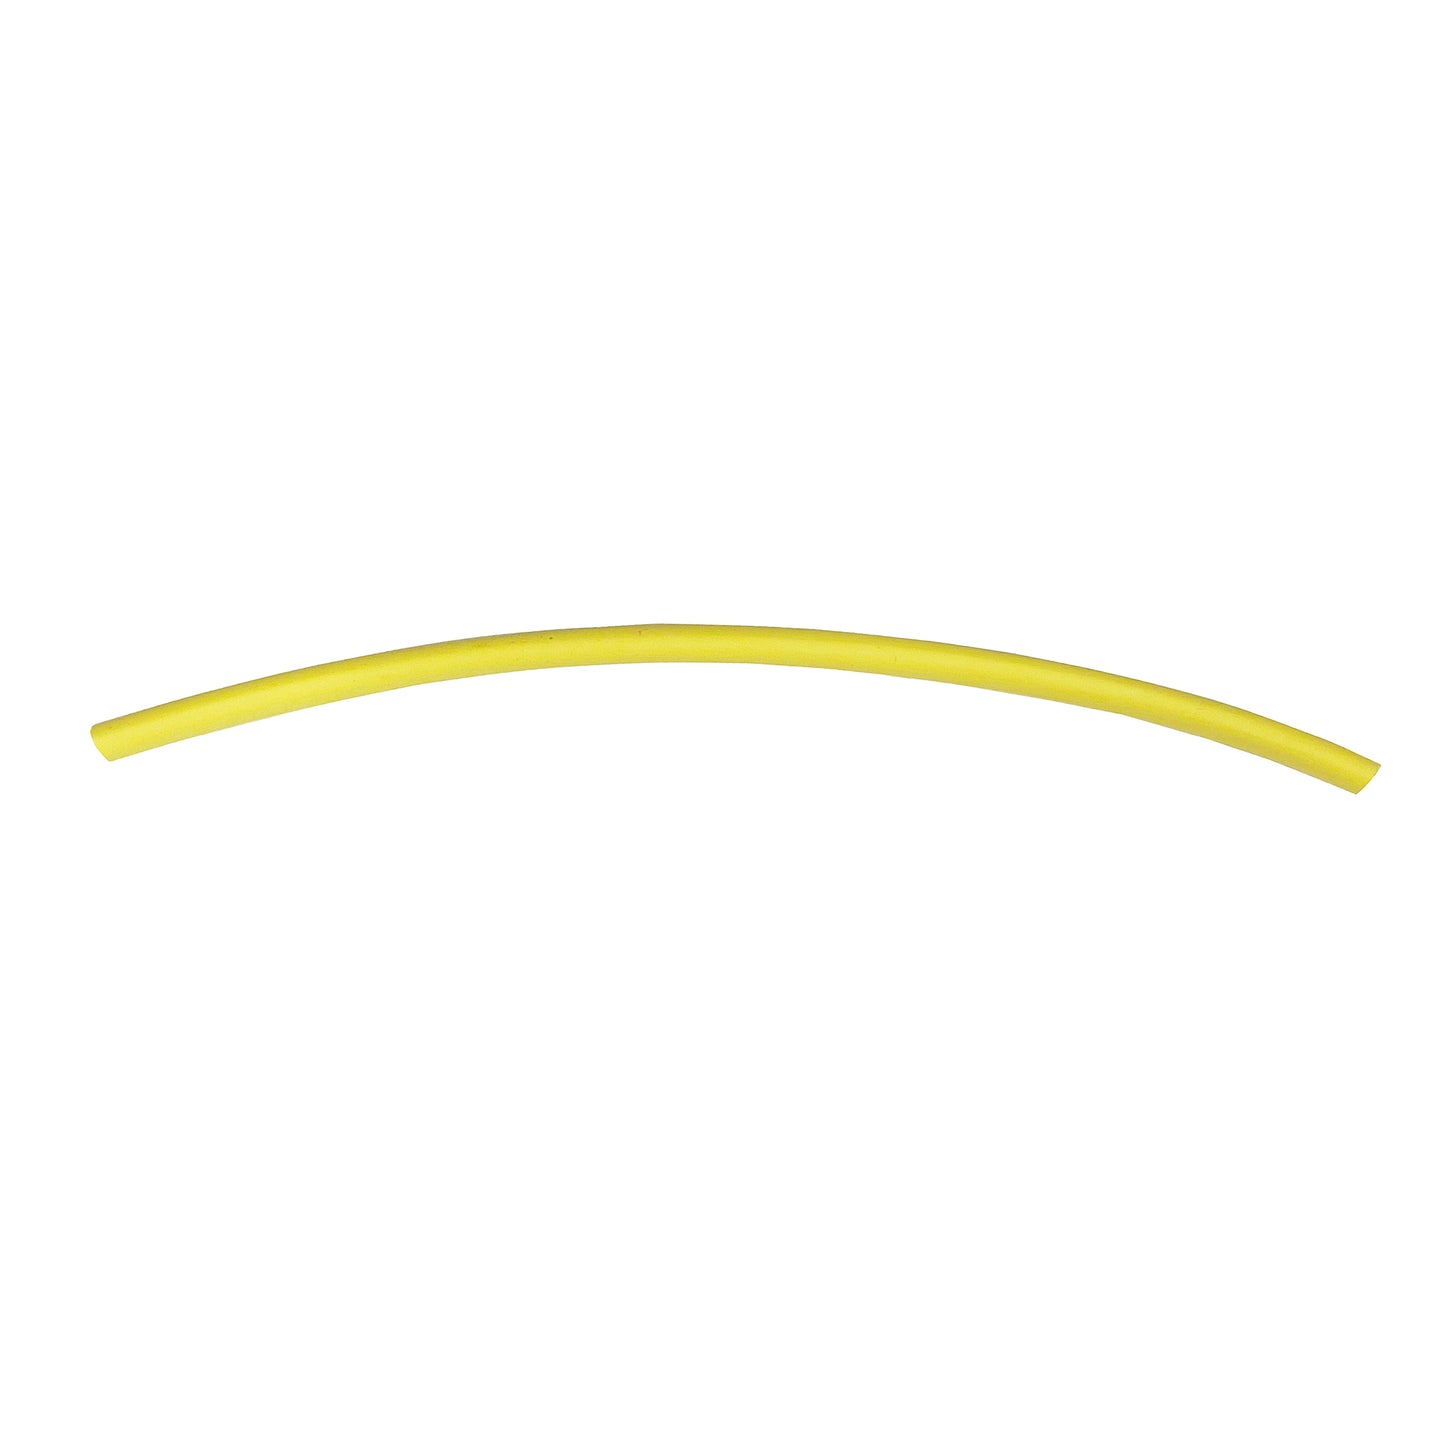 Flexible Thin Single Wall Non-Adhesive Heat Shrink Tubing 2:1 Yellow 1/8" ID - 12" Inch 10 Pack